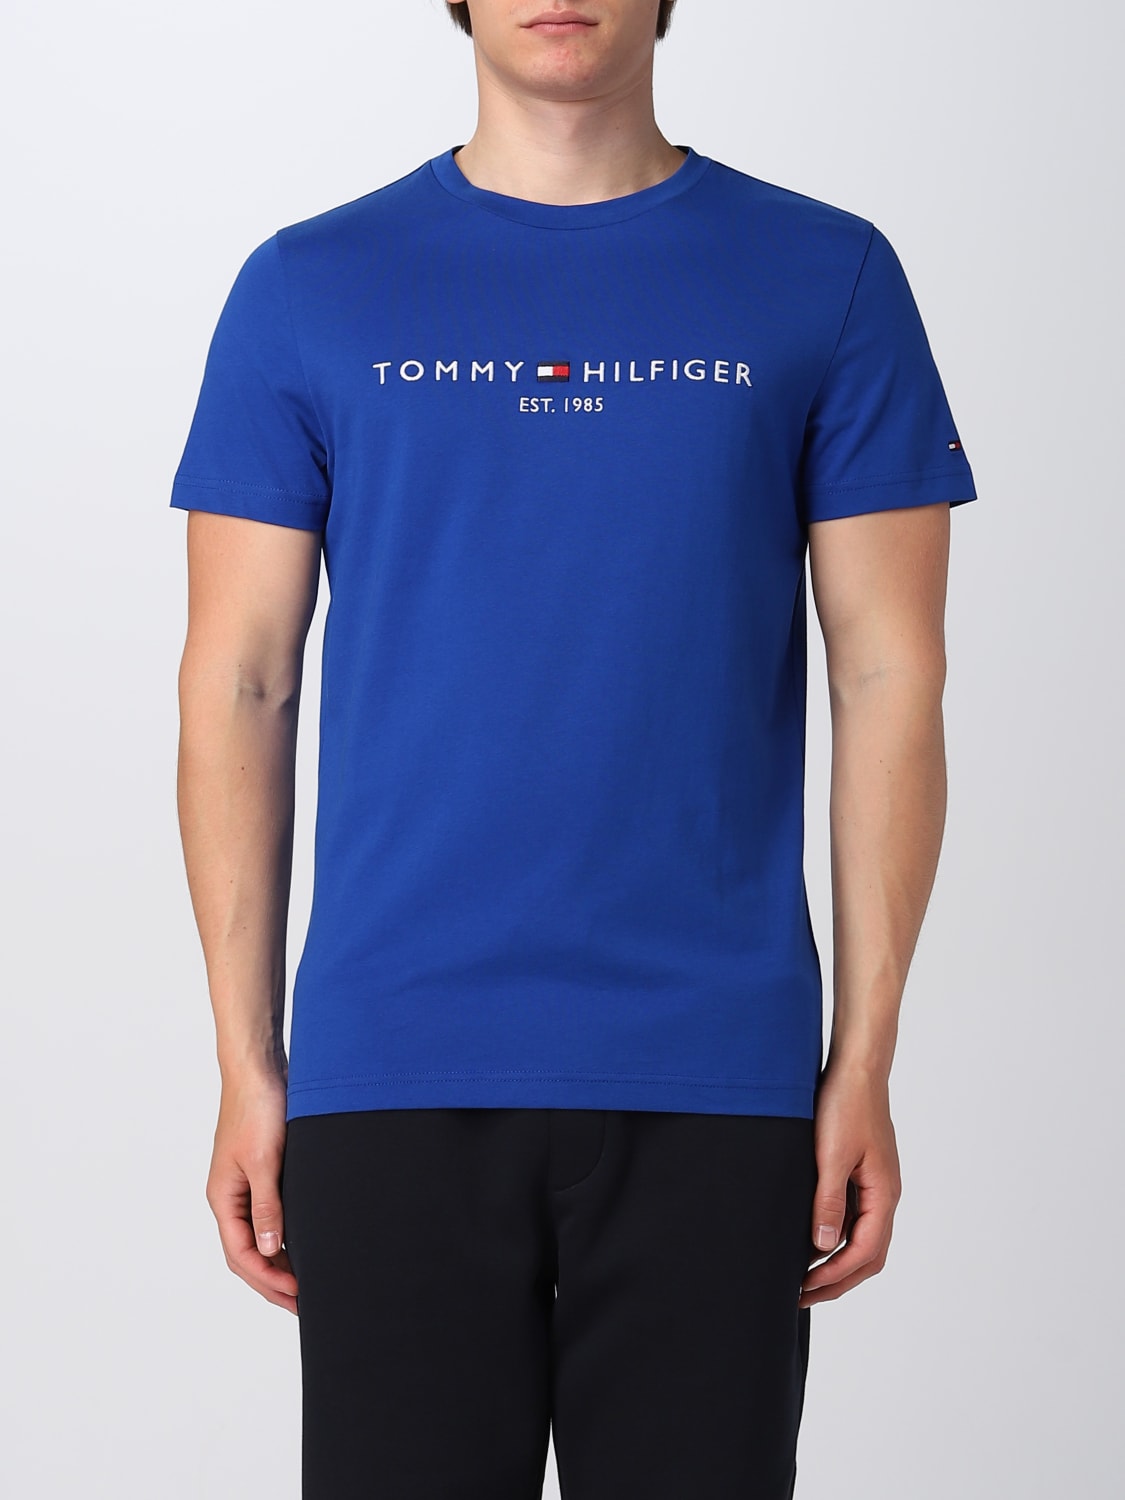 TOMMY HILFIGER: cotton t-shirt - Blue | Hilfiger online Tommy Royal MW0MW11797 t-shirt at